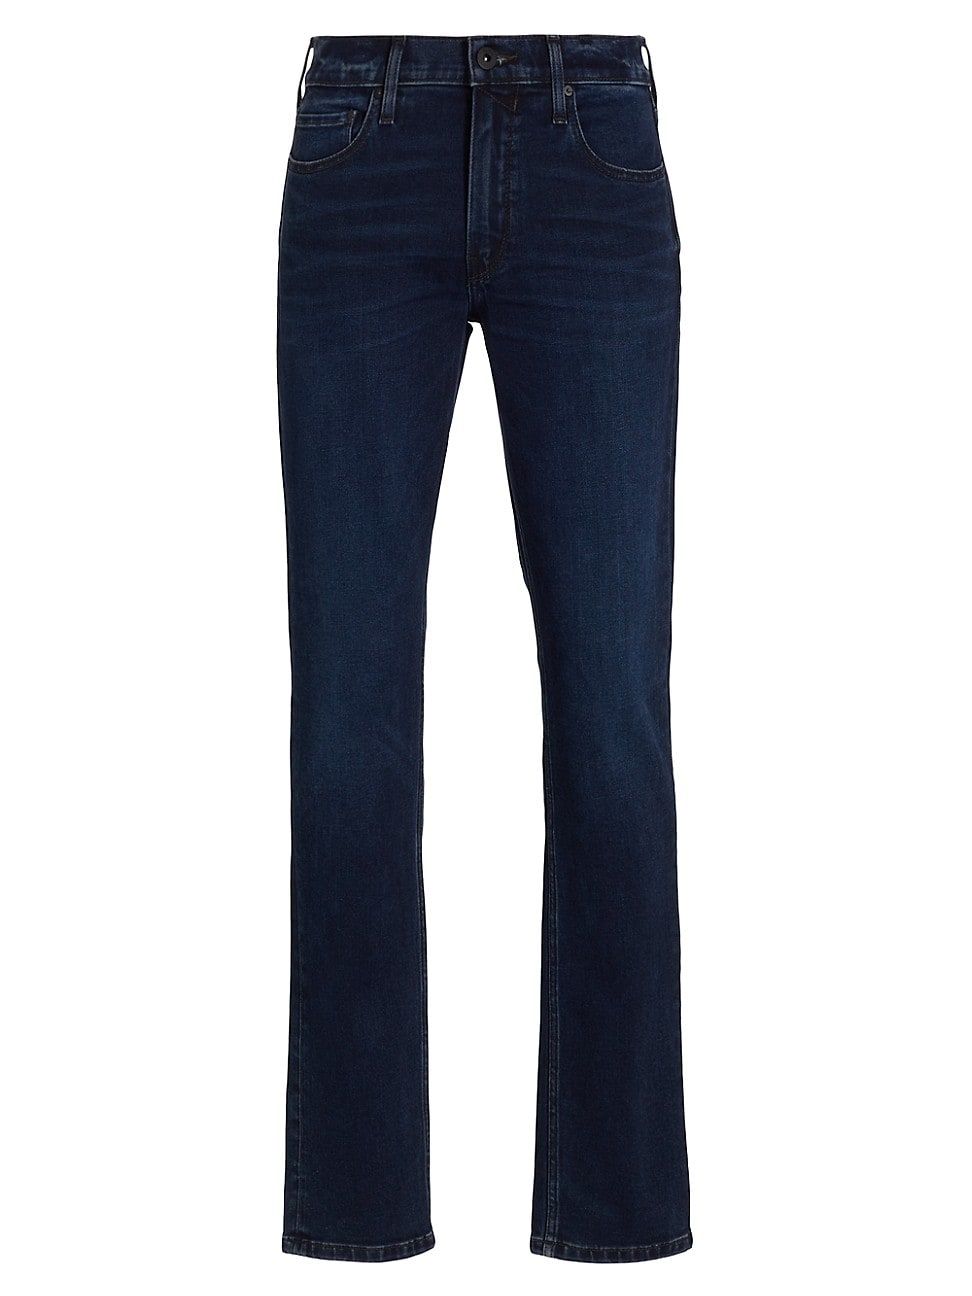 Lennox Slim-Fit Stretch Jeans | Saks Fifth Avenue